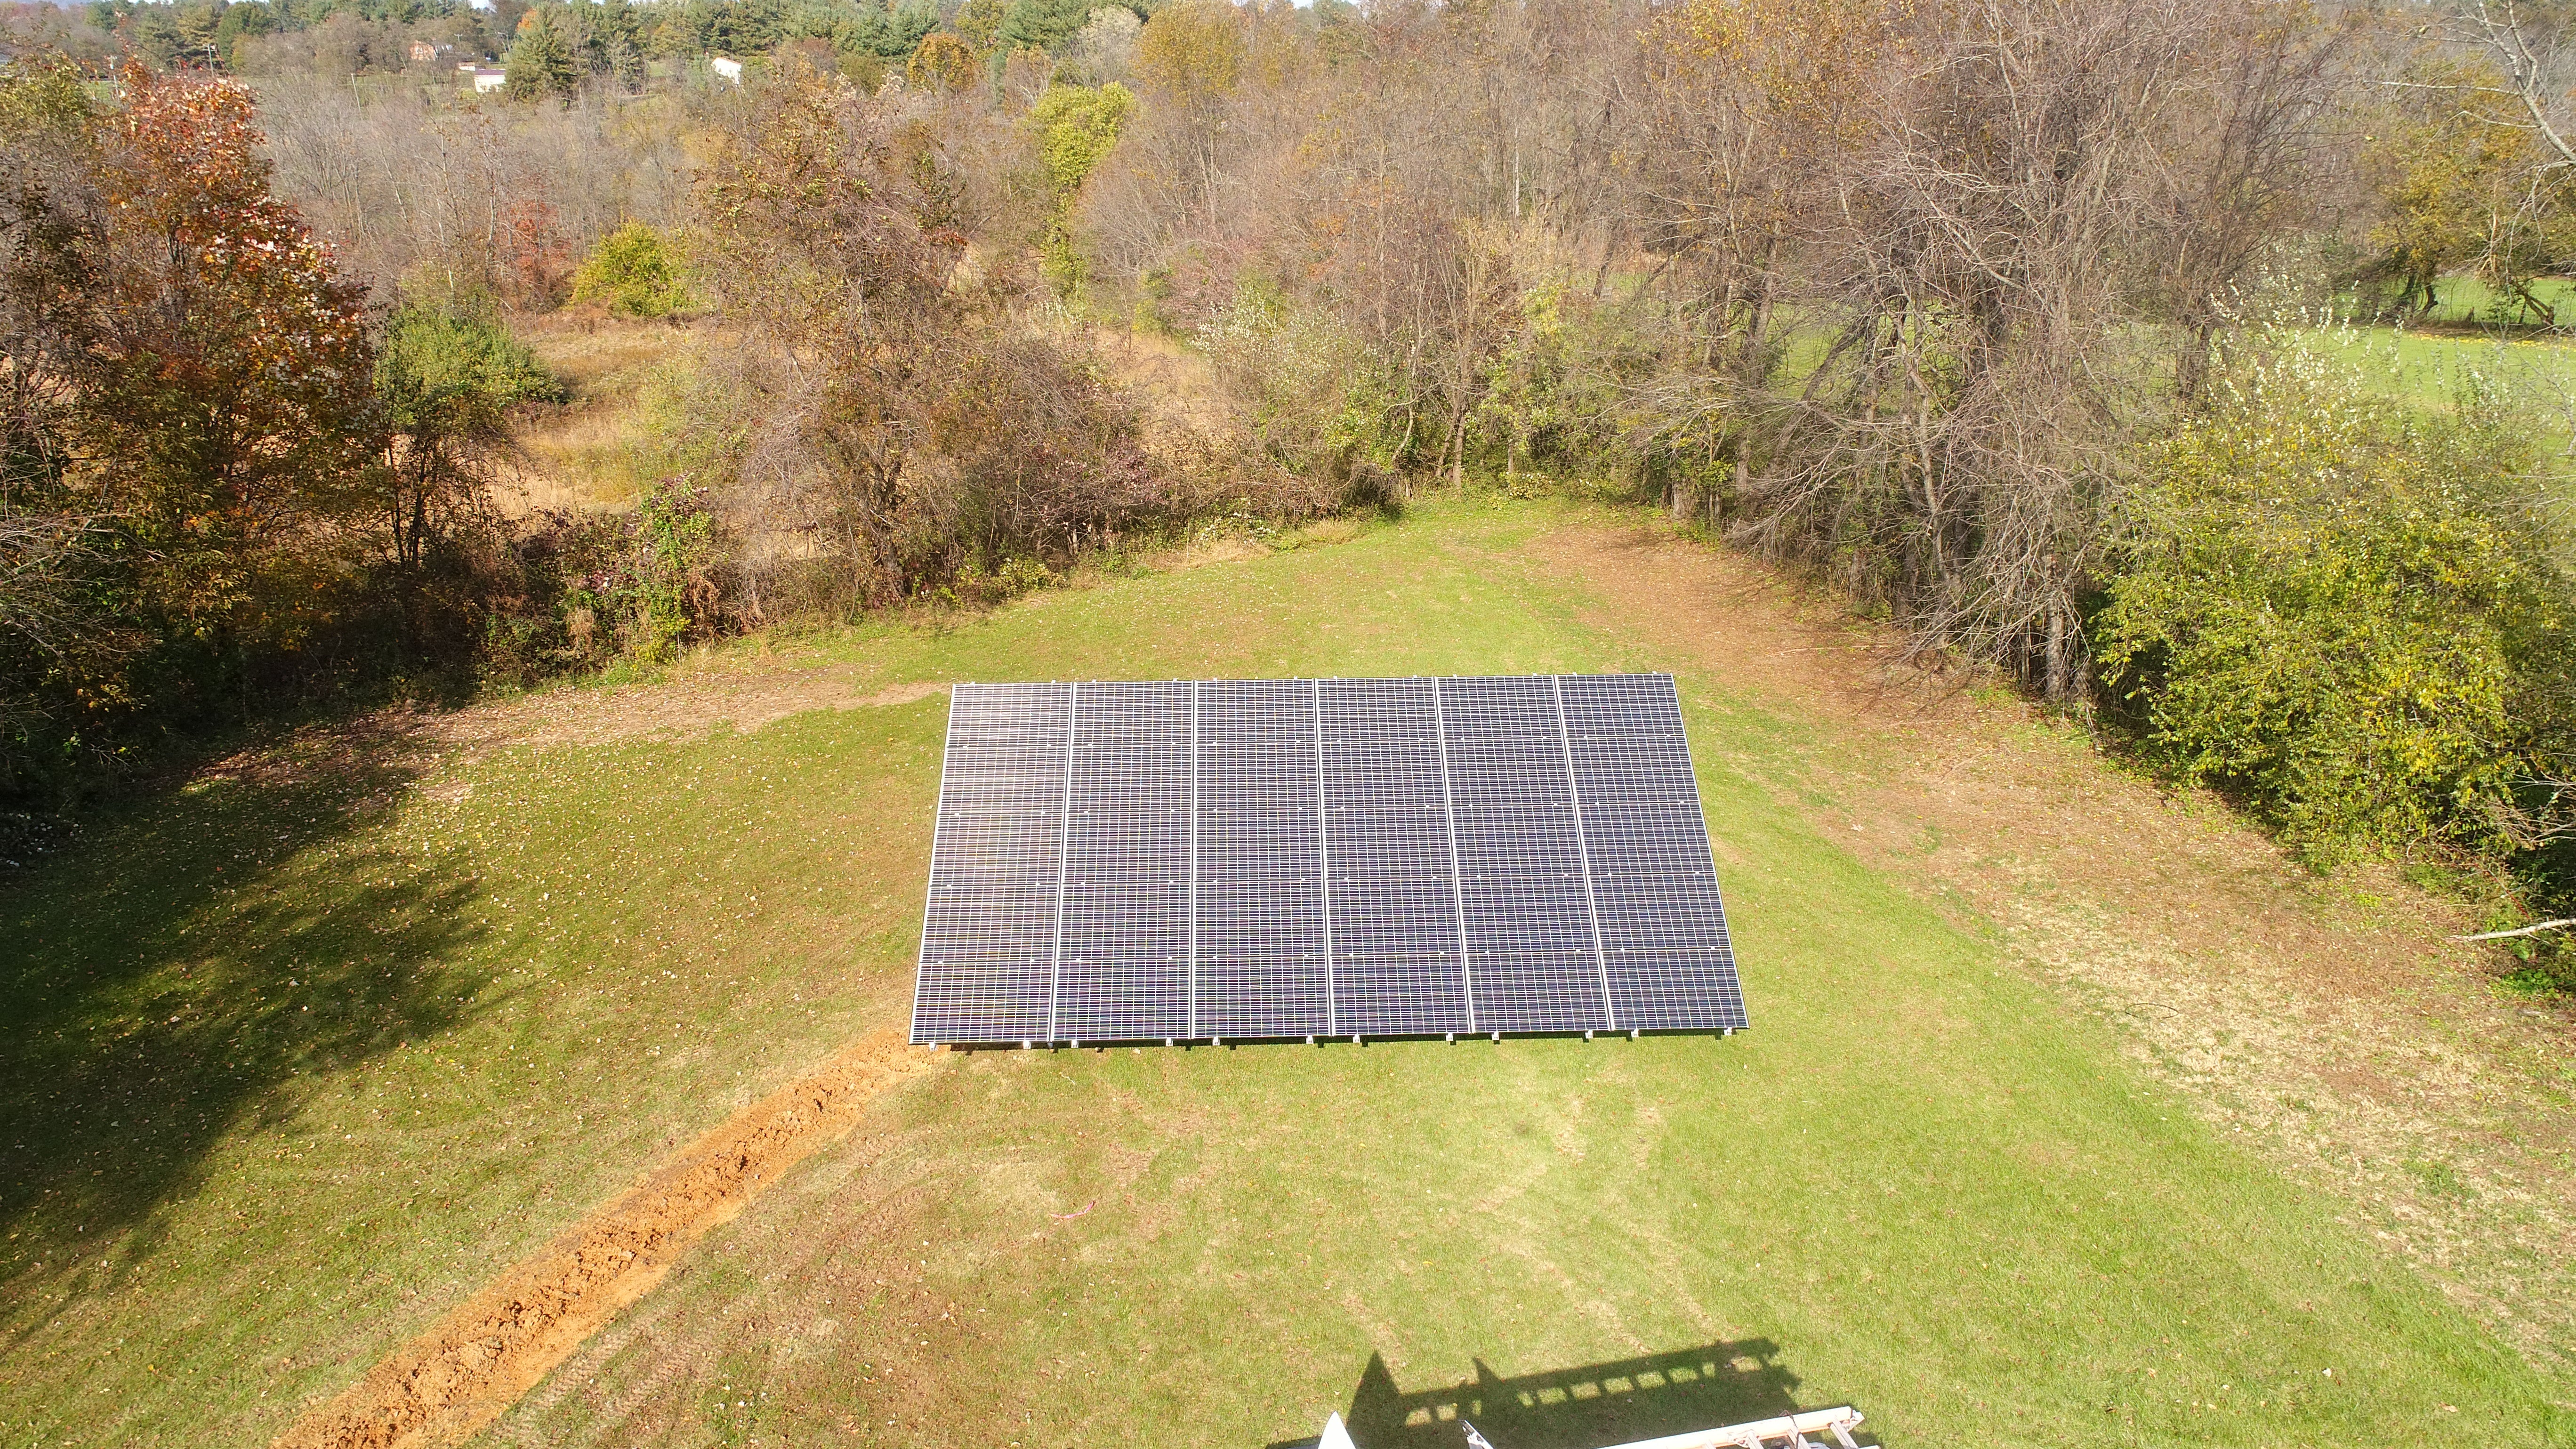 9.9 kW system in Lovettsville, VA